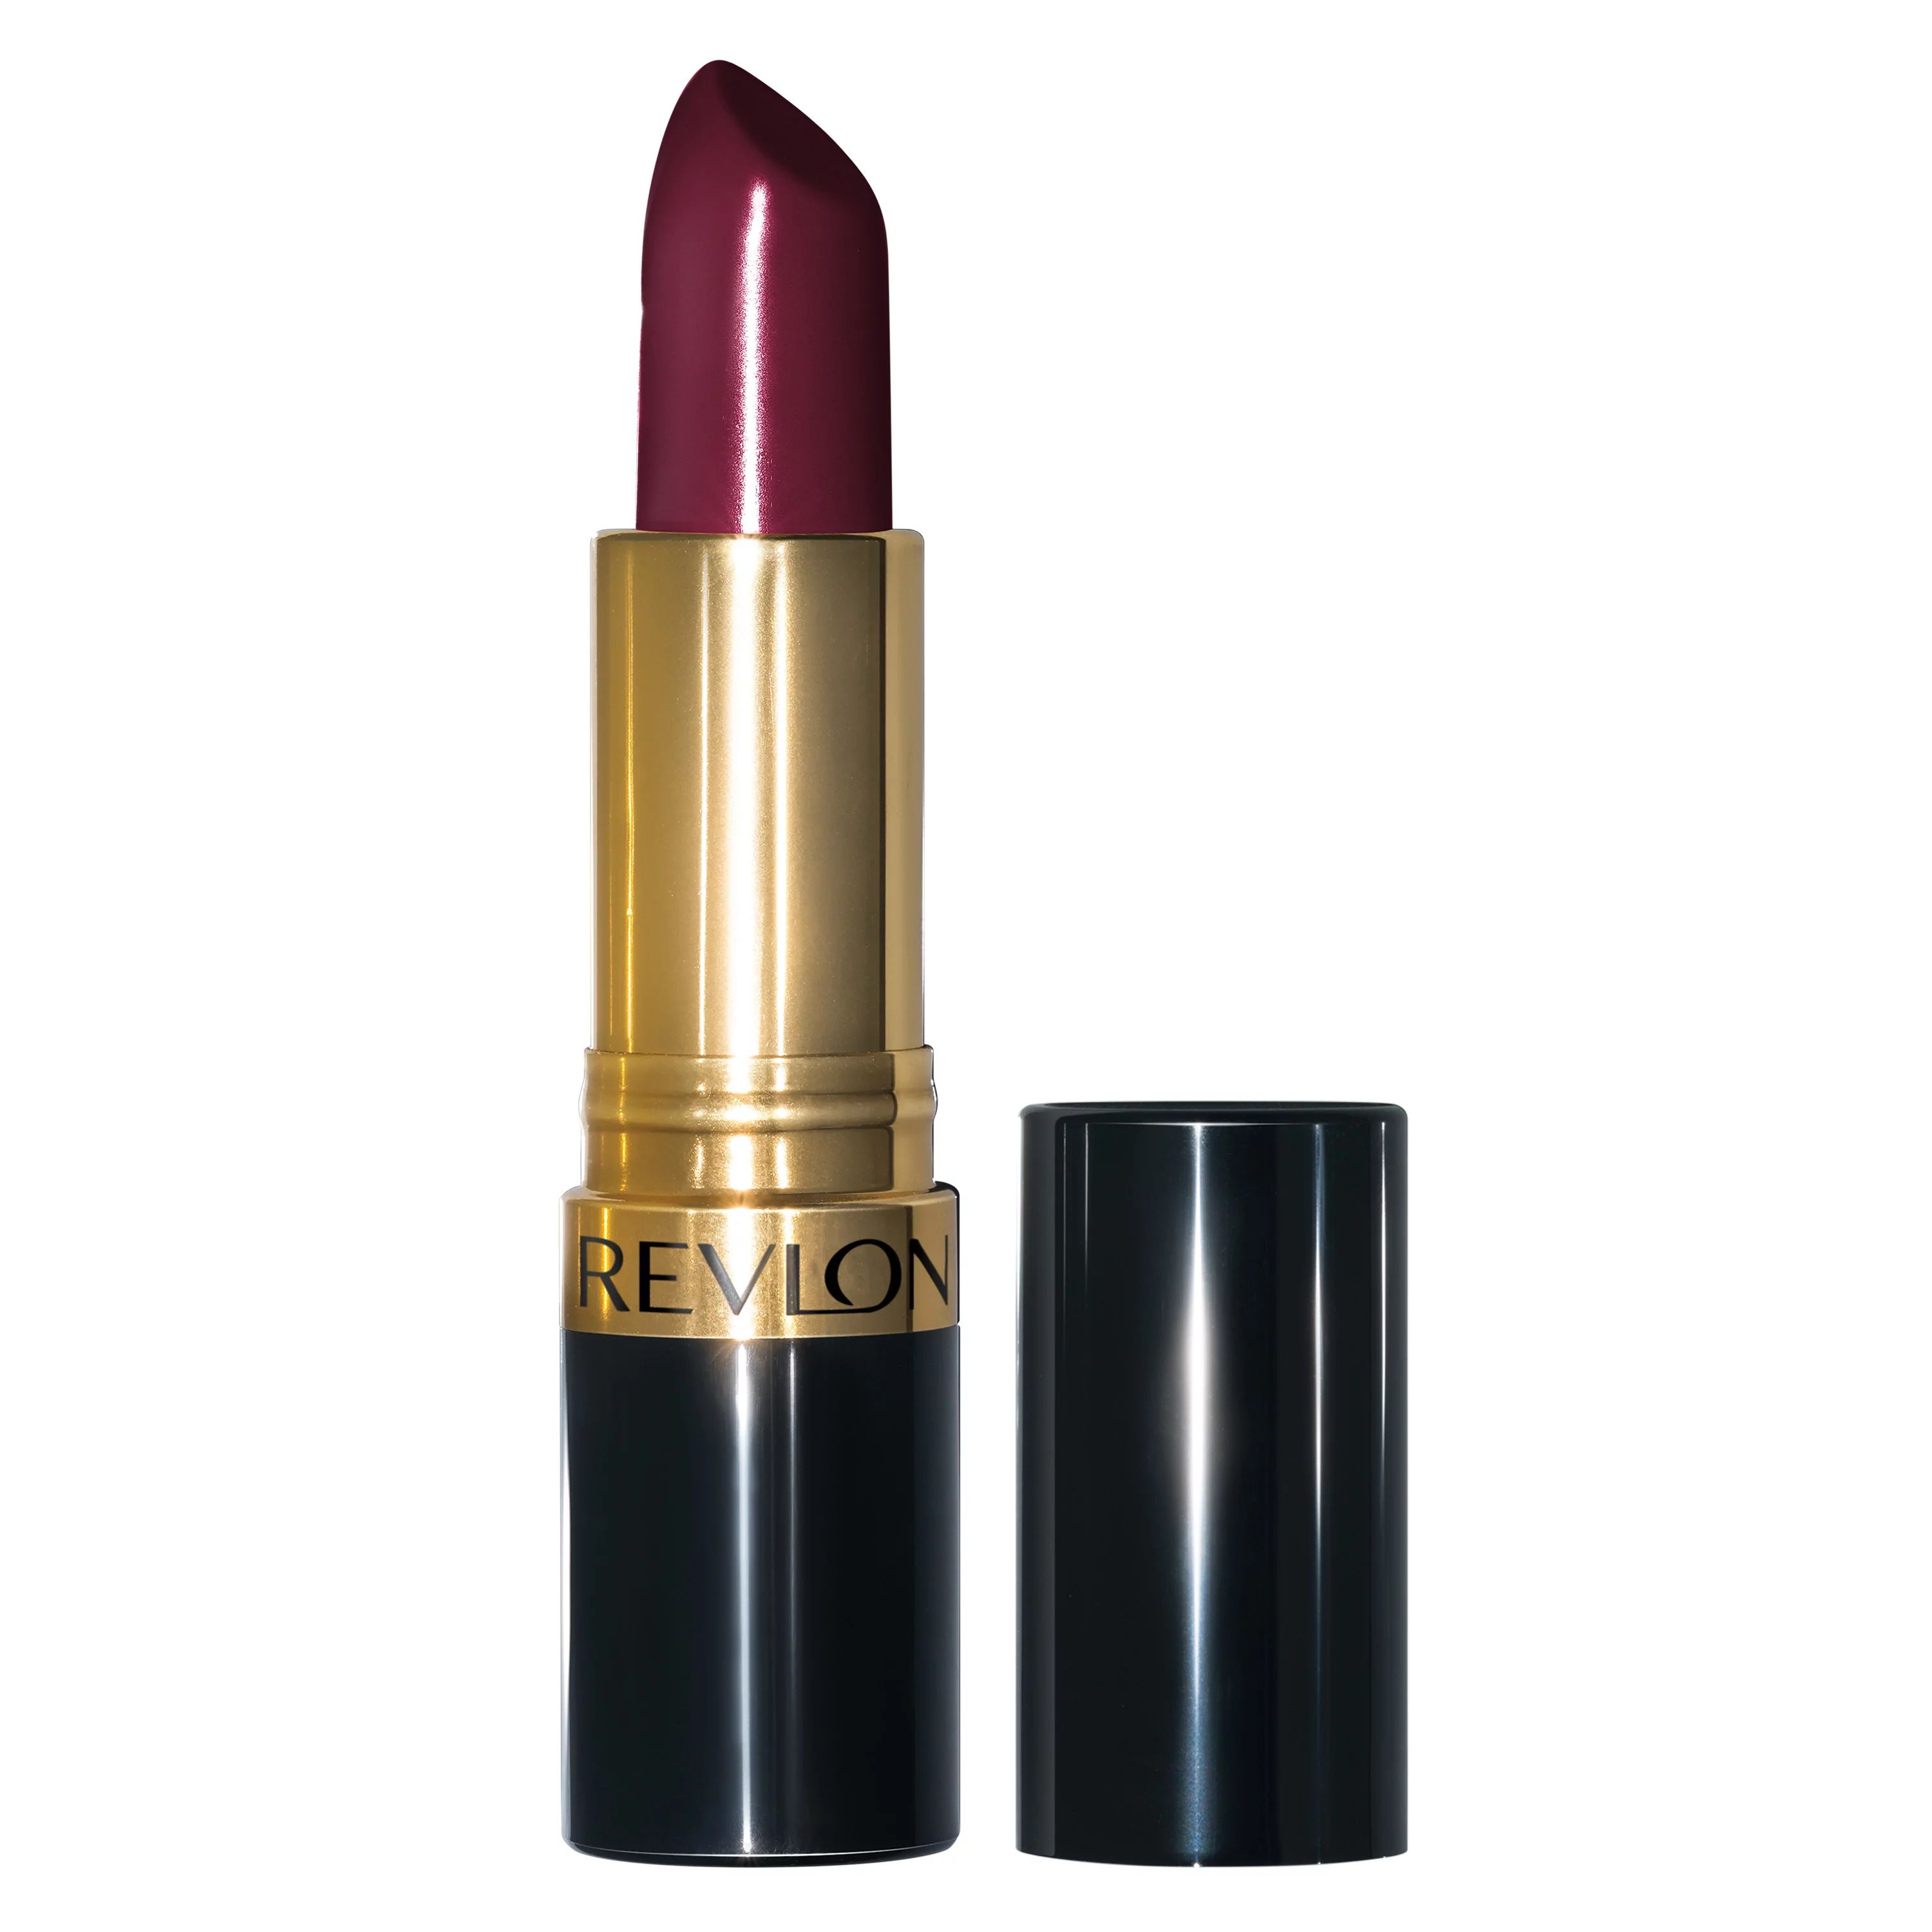 Revlon Super Lustrous Lipstick, Cream Finish, High Impact Lipcolor with Moisturizing Creamy Formu... | Walmart (US)